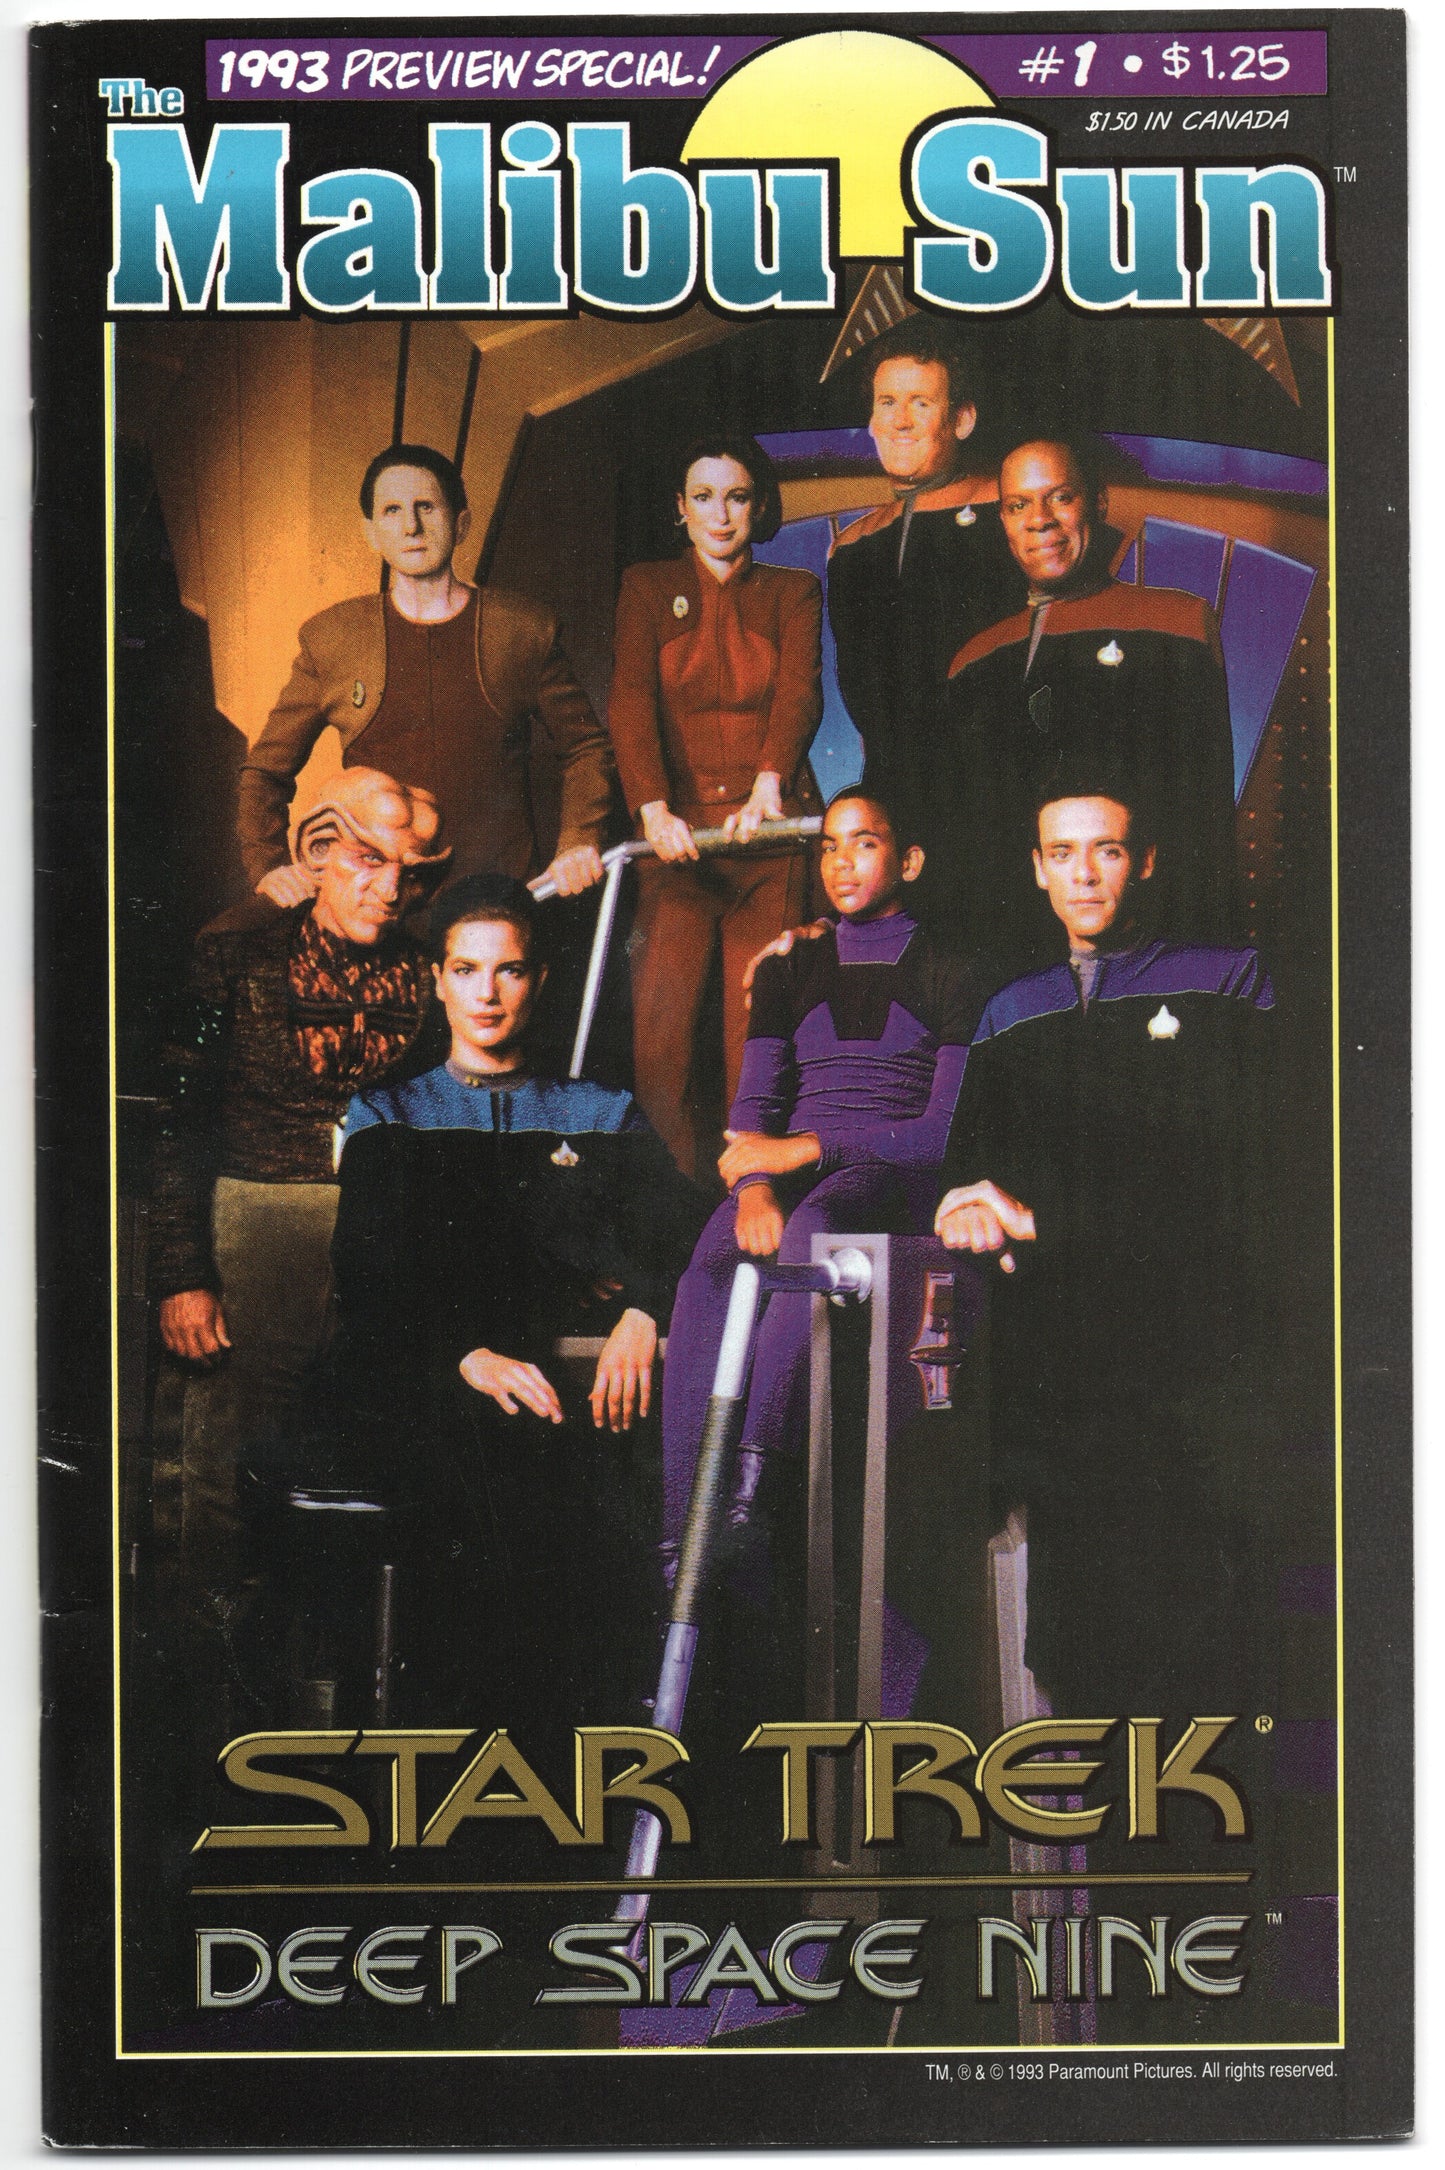 Malibu Sun Preview Special 1 1993 Star Trek Deep Space Nine Photo Cover